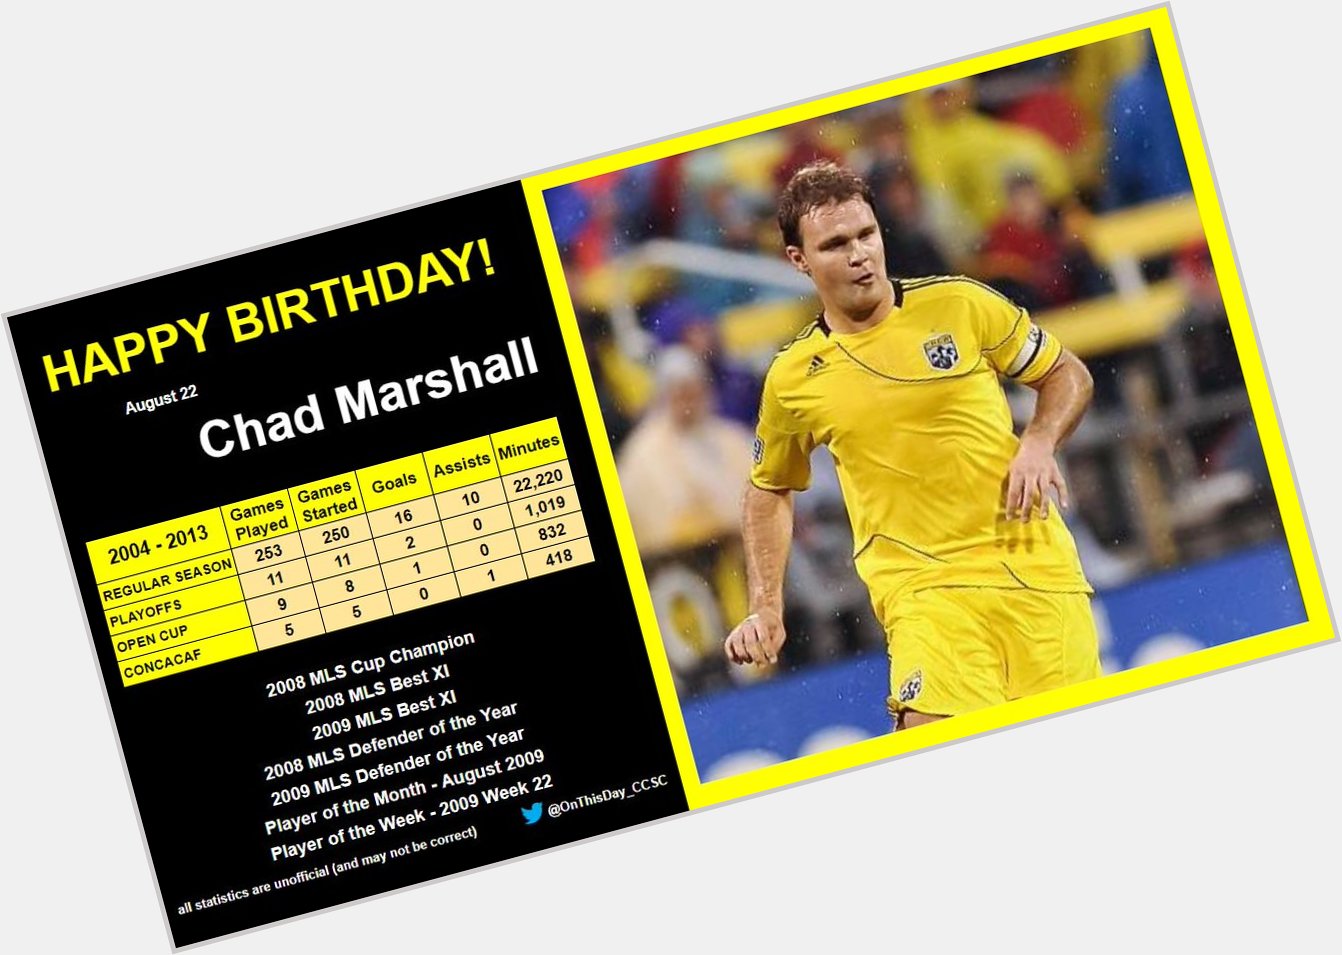 8-22
Happy Birthday, Chad Marshall!   